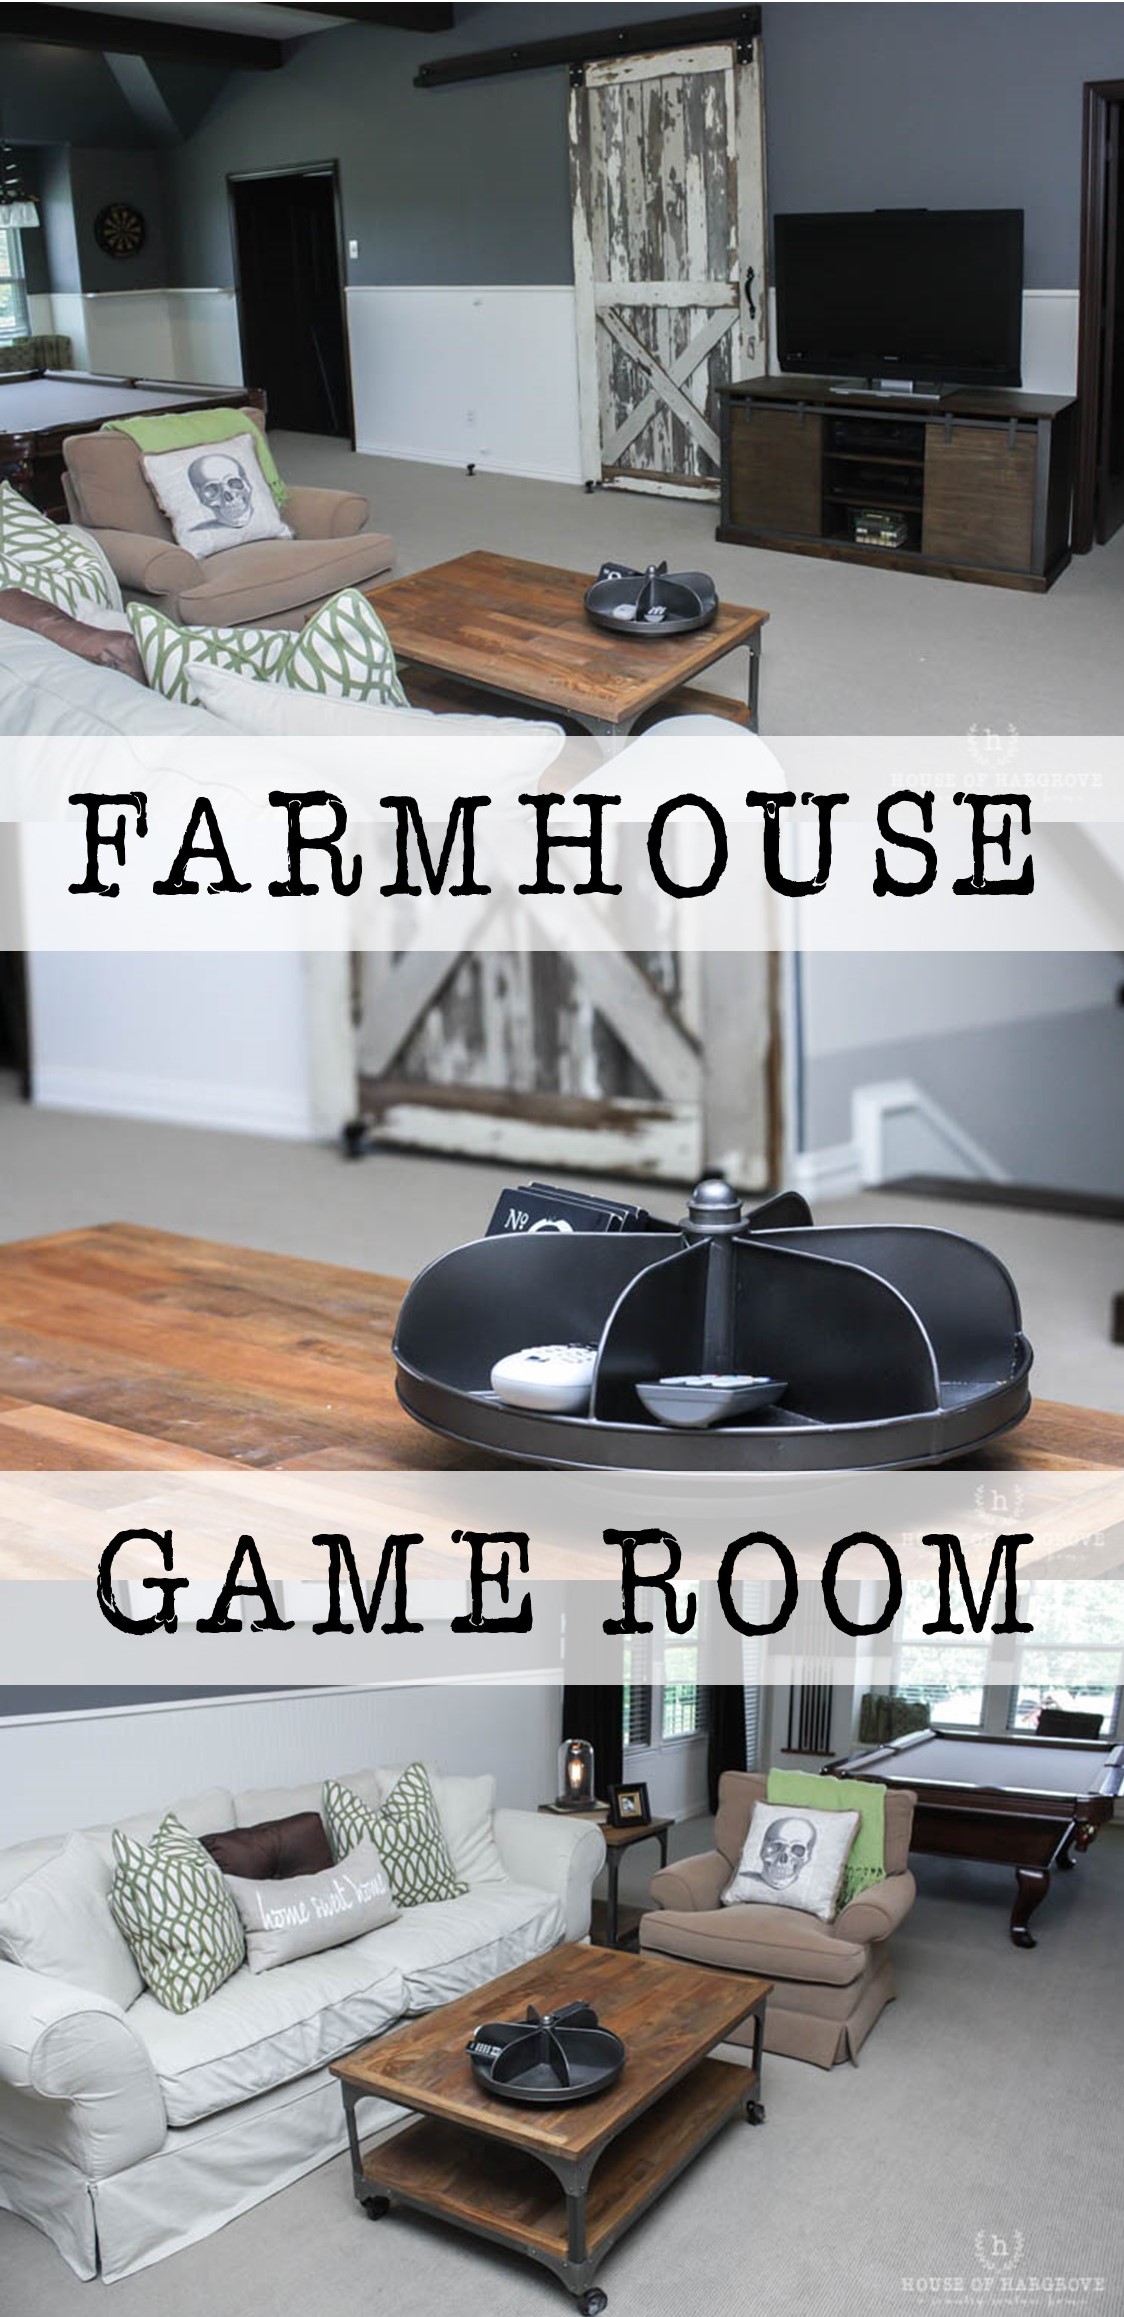 farmhouse-gameroom-10